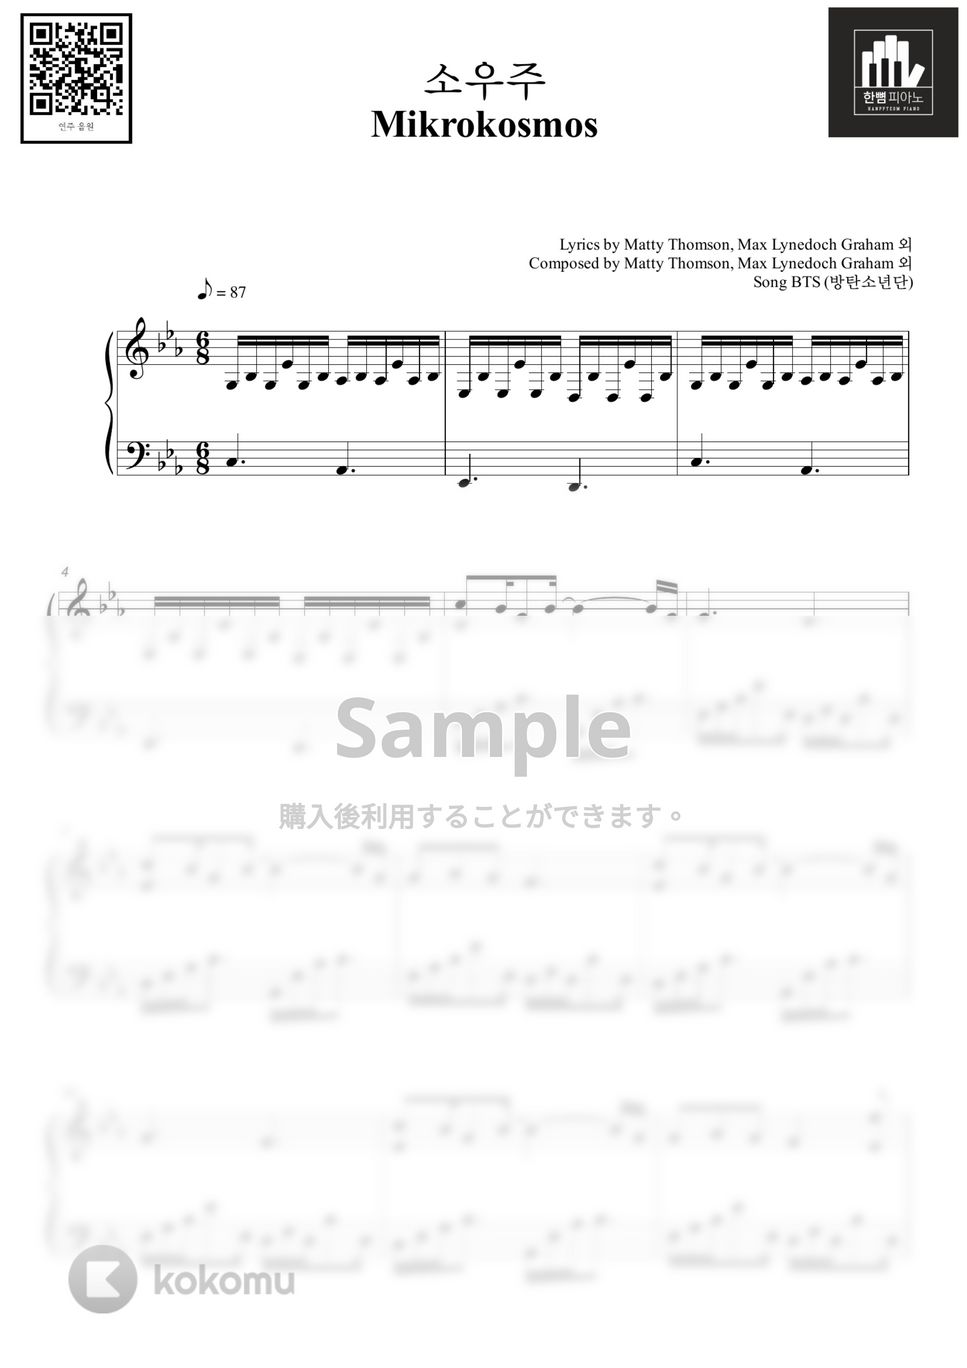 防弾少年団(BTS) - 小宇宙(Mikrokosmos) by HANPPYEOMPIANO